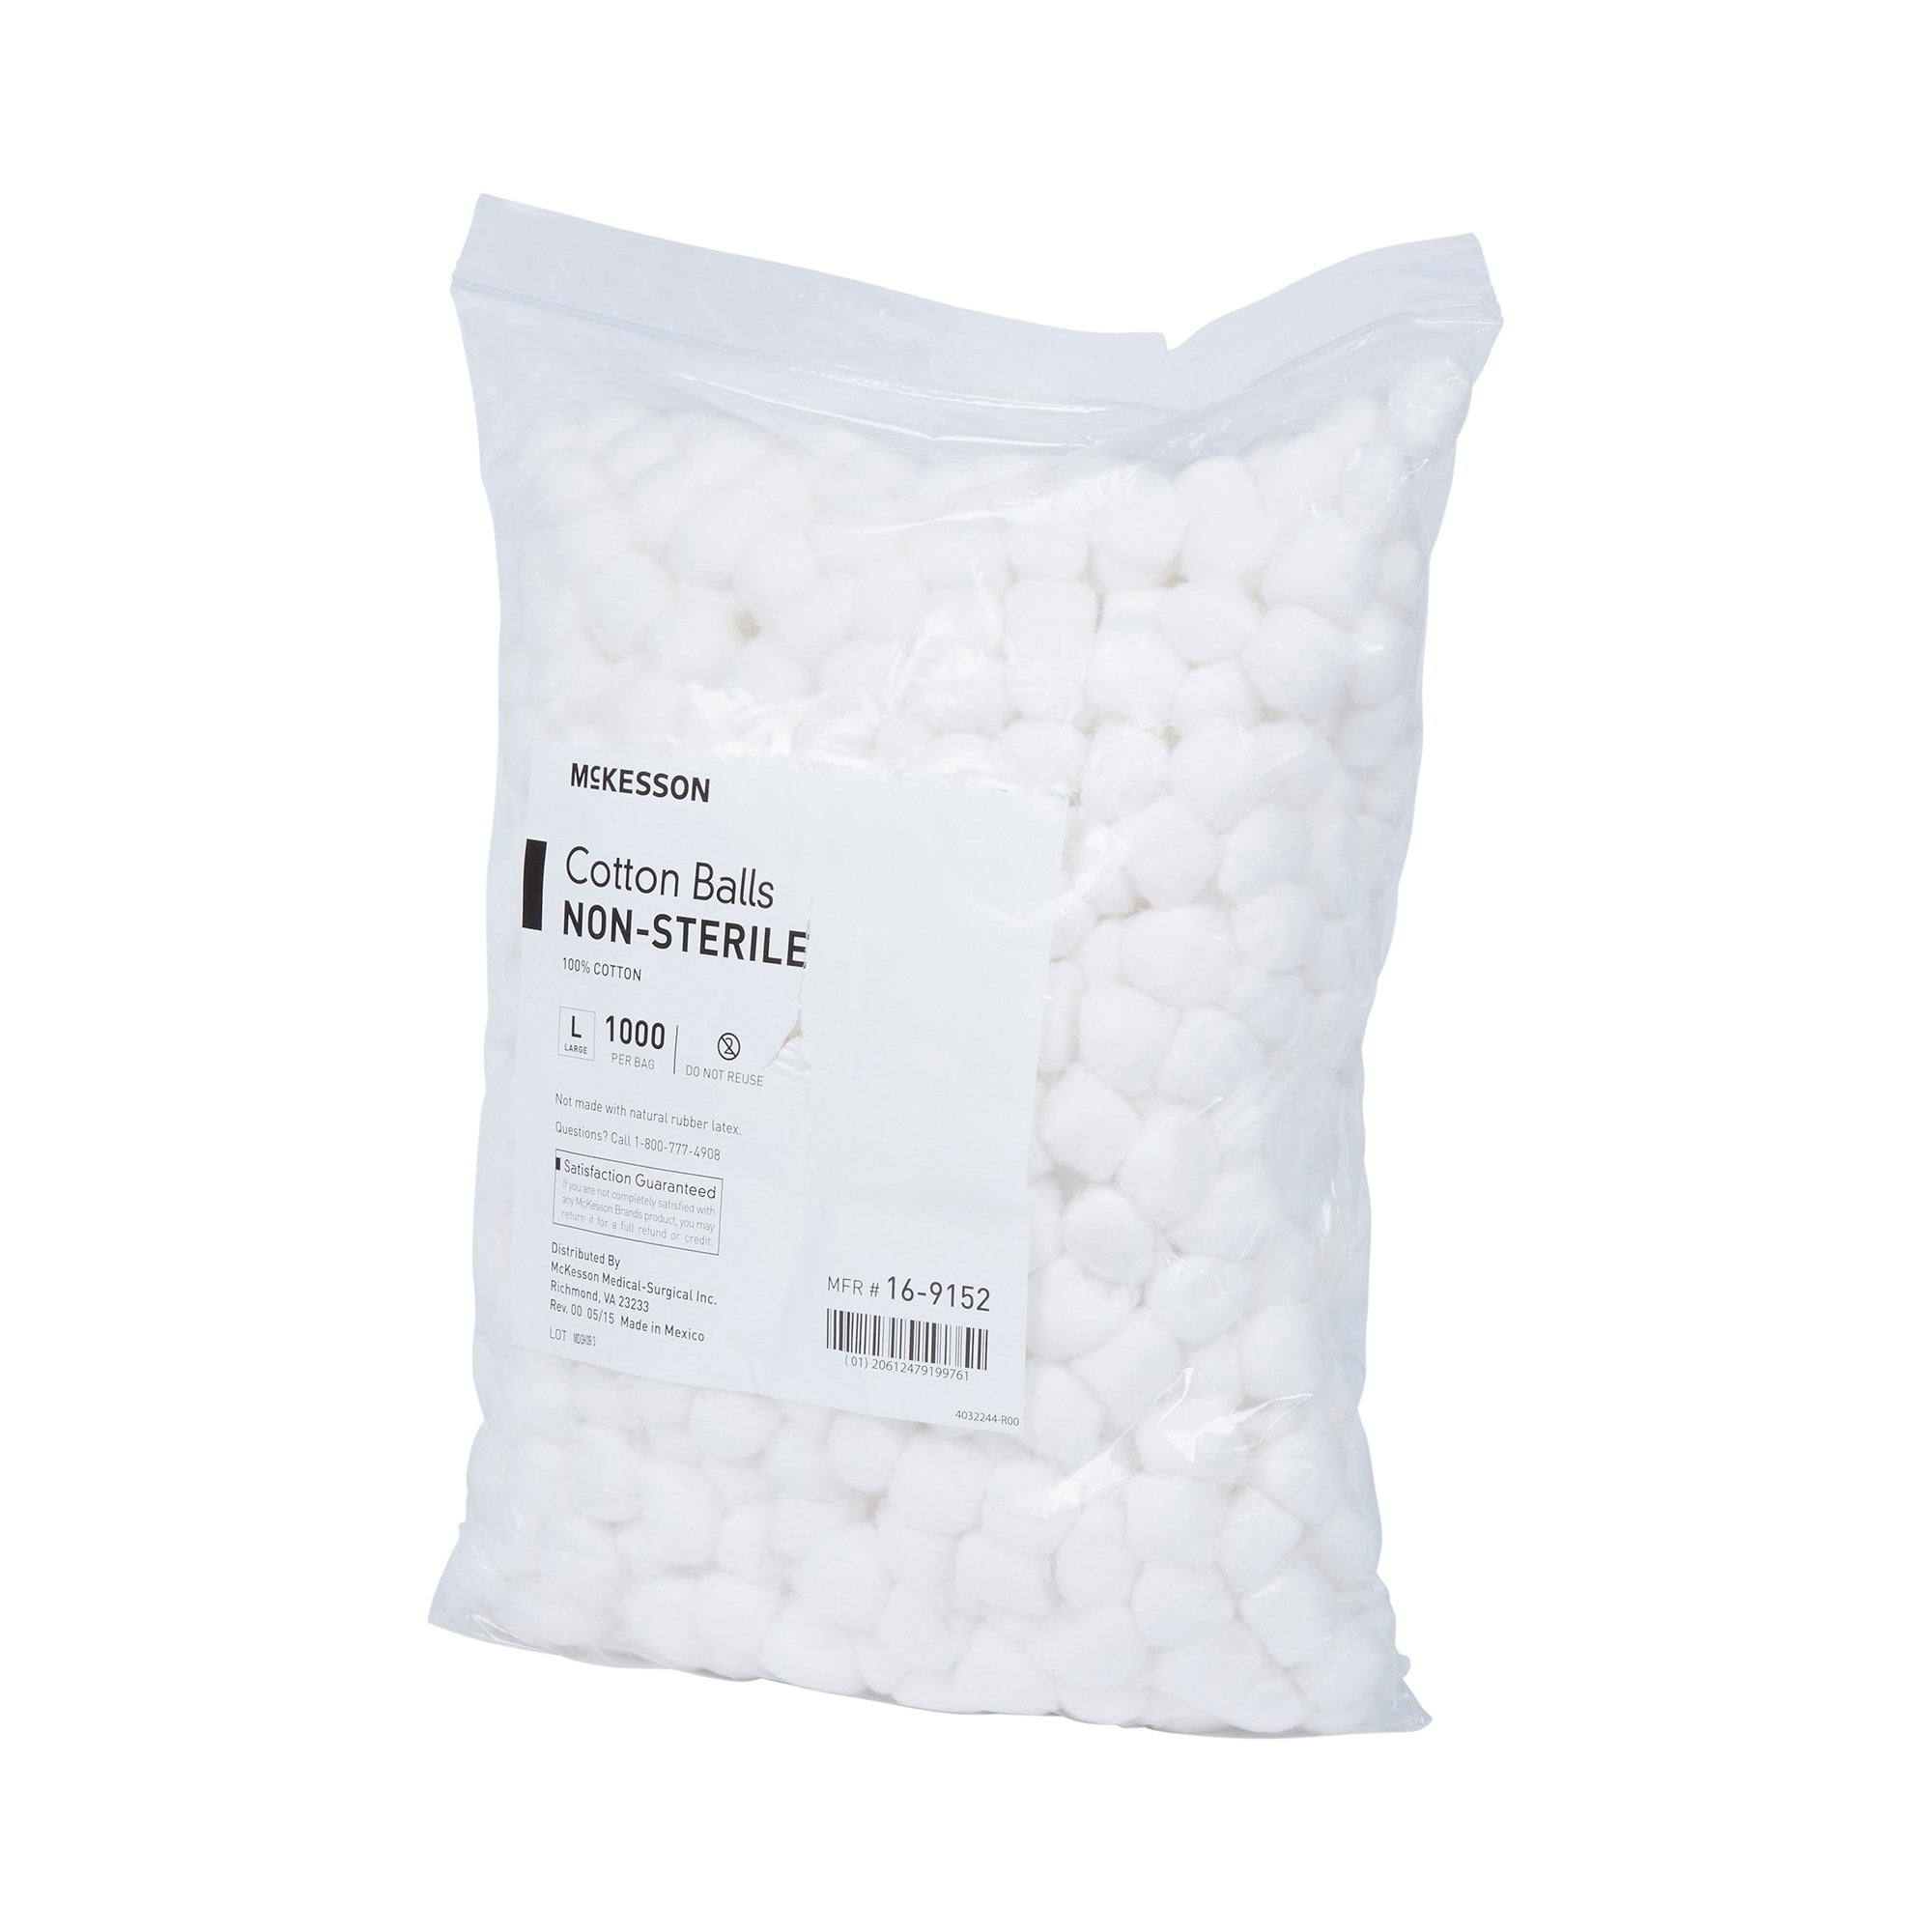 McKesson Cotton Balls, Non-Sterile Maximum Absorbency, Large, 1000